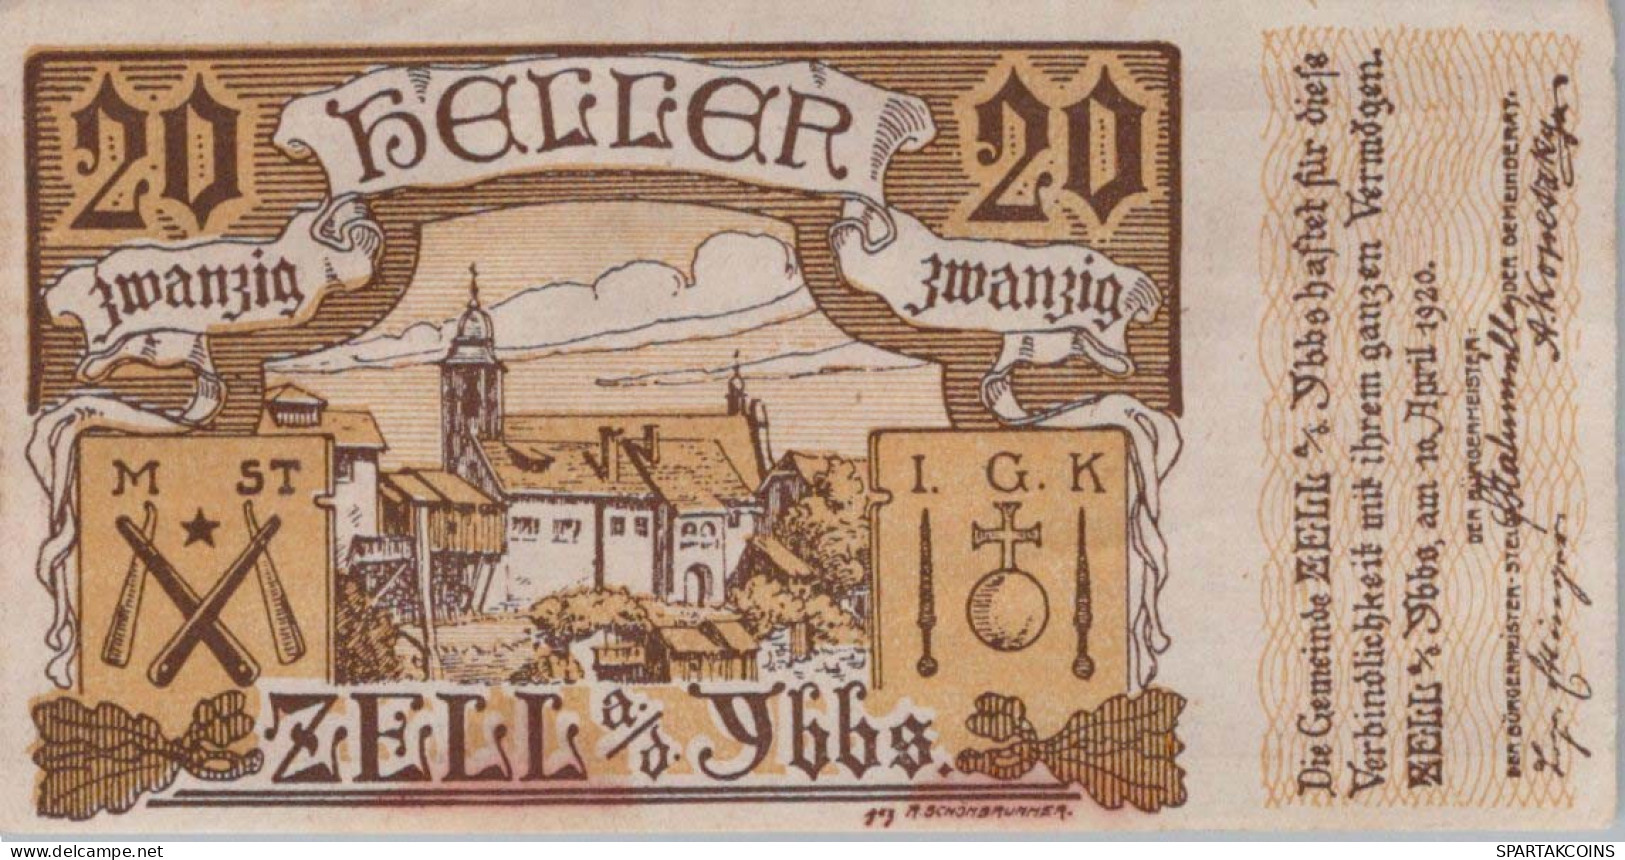 20 HELLER 1920 Stadt ZELL AN DER YBBS Niedrigeren Österreich Notgeld #PE106 - [11] Local Banknote Issues